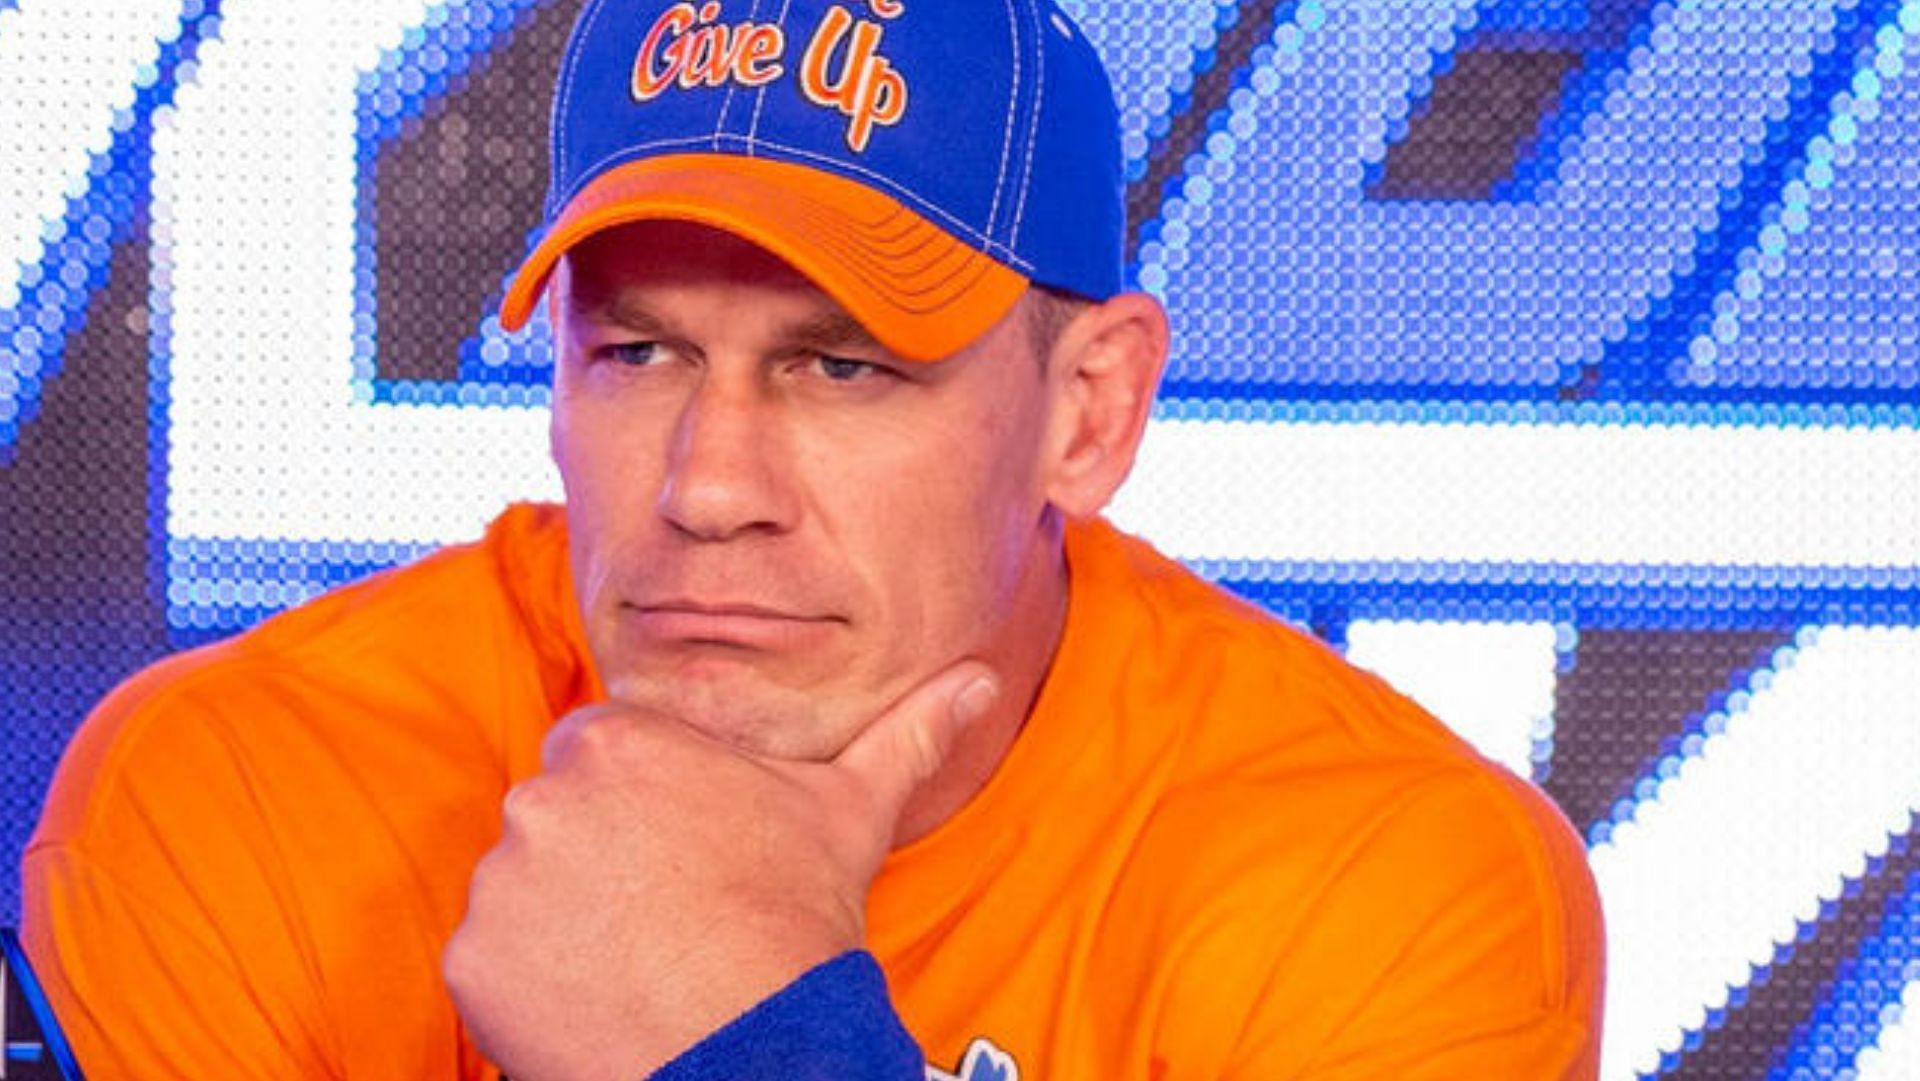 John Cena is 16-time world champion.